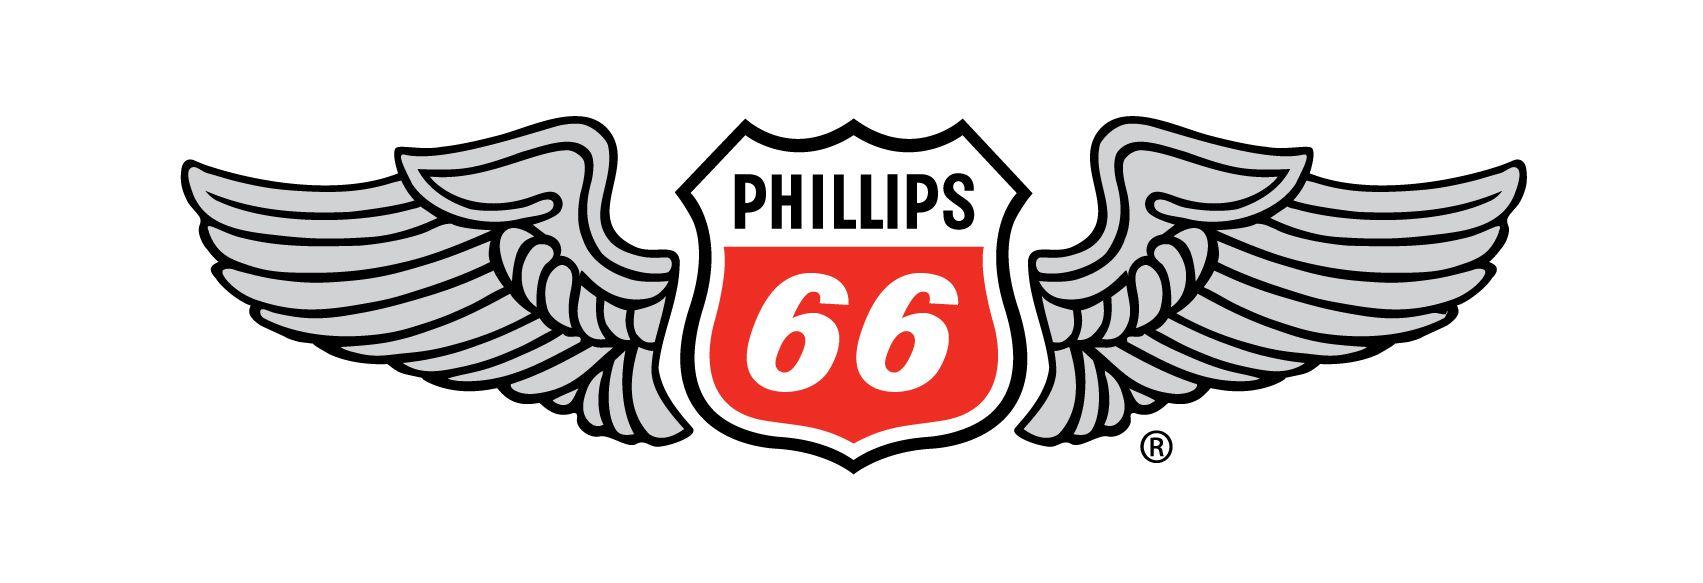 Phillips 66 Logo - Phillips 66 Aviation Lubricants